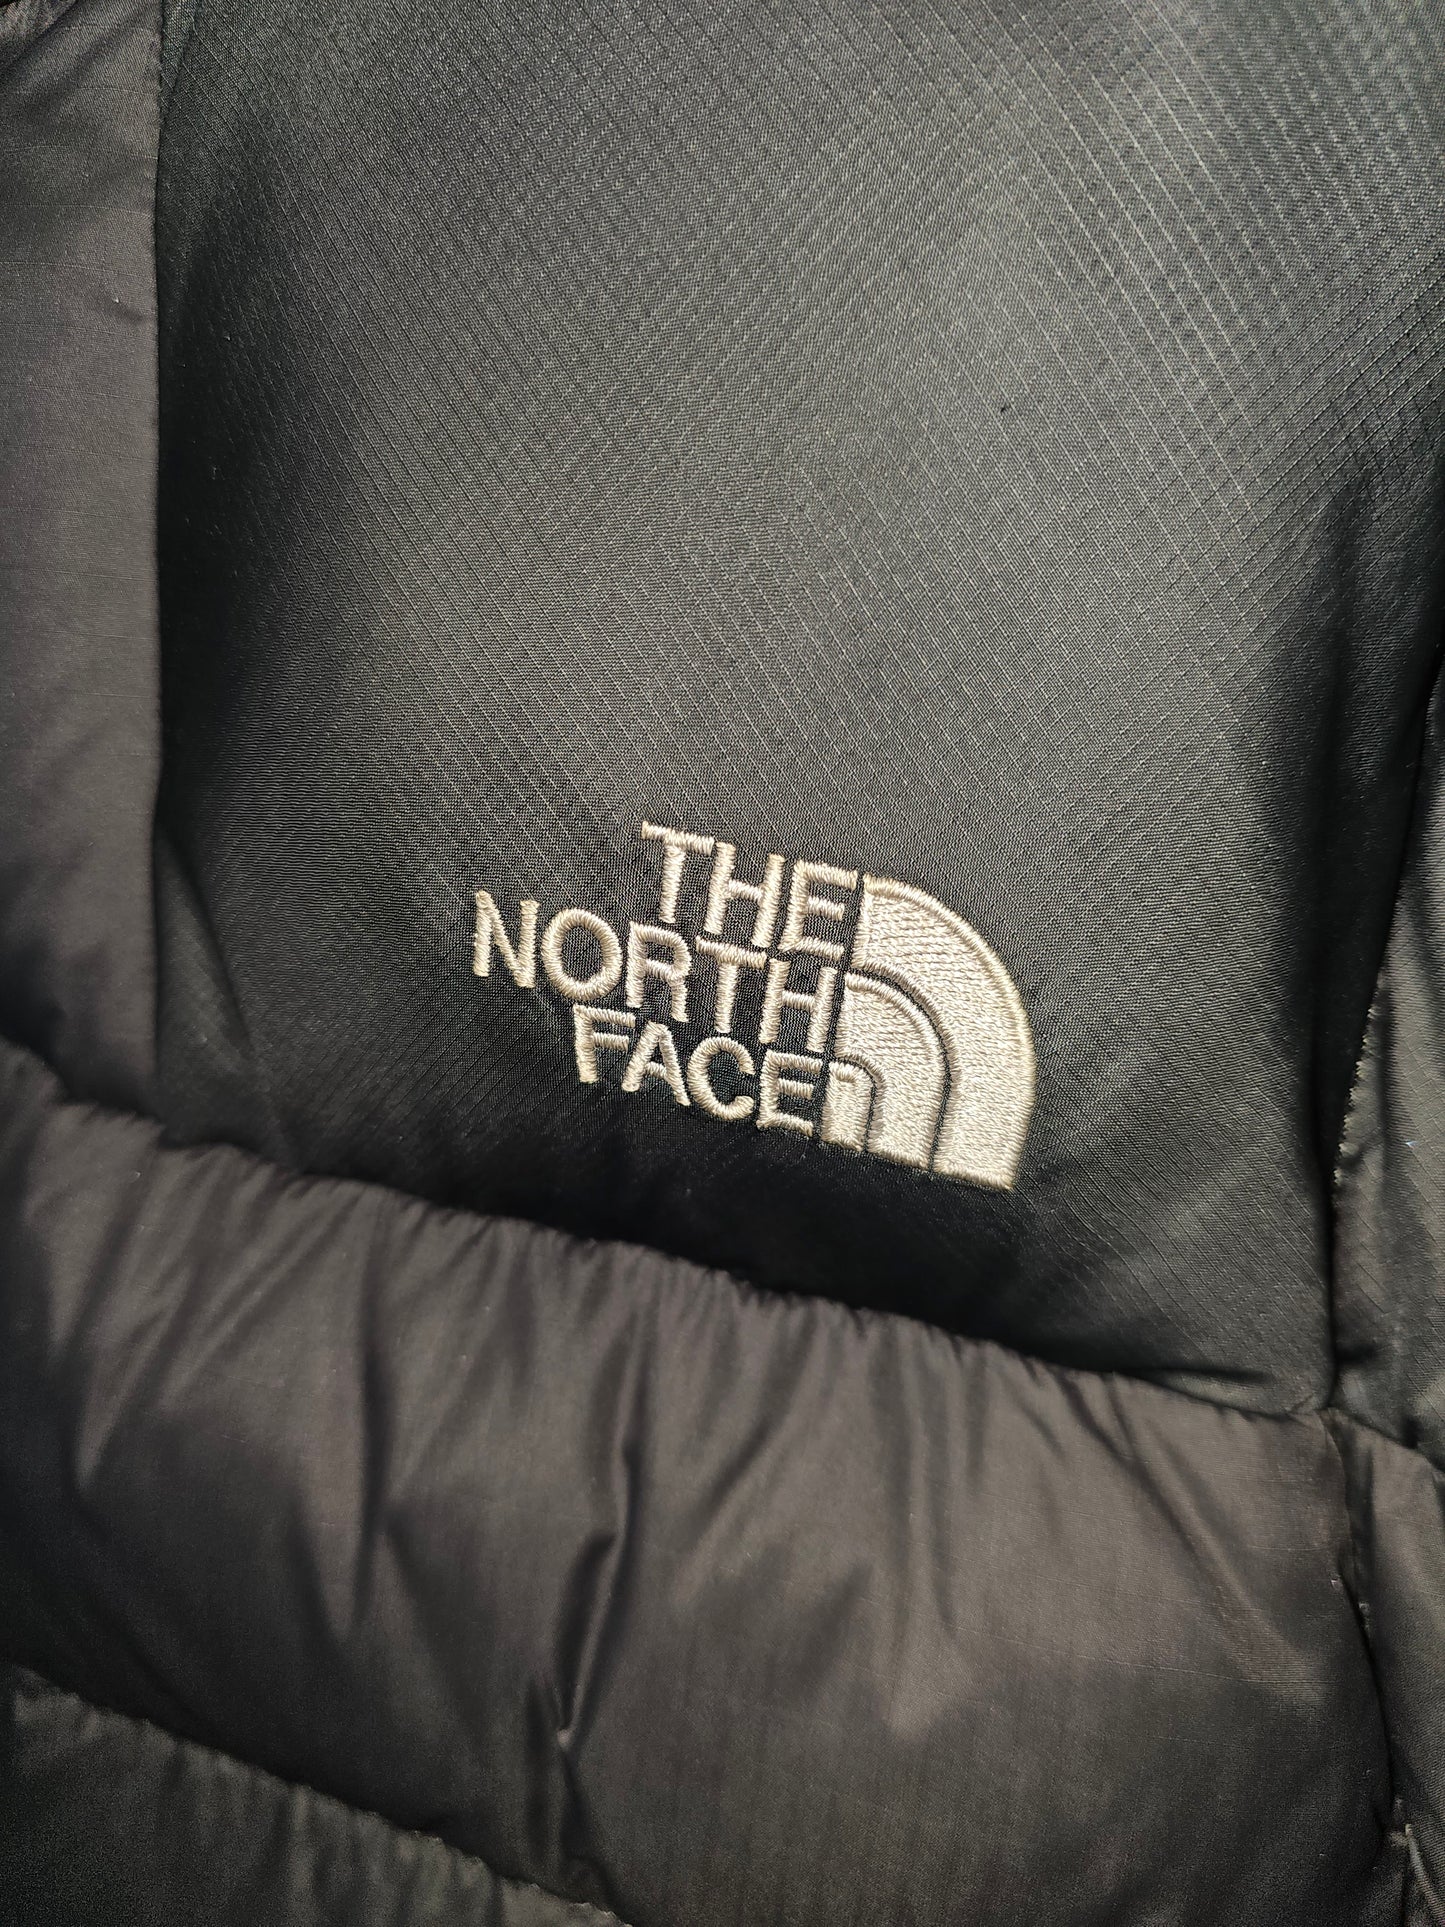 The North Face Grey Gilet (XL)